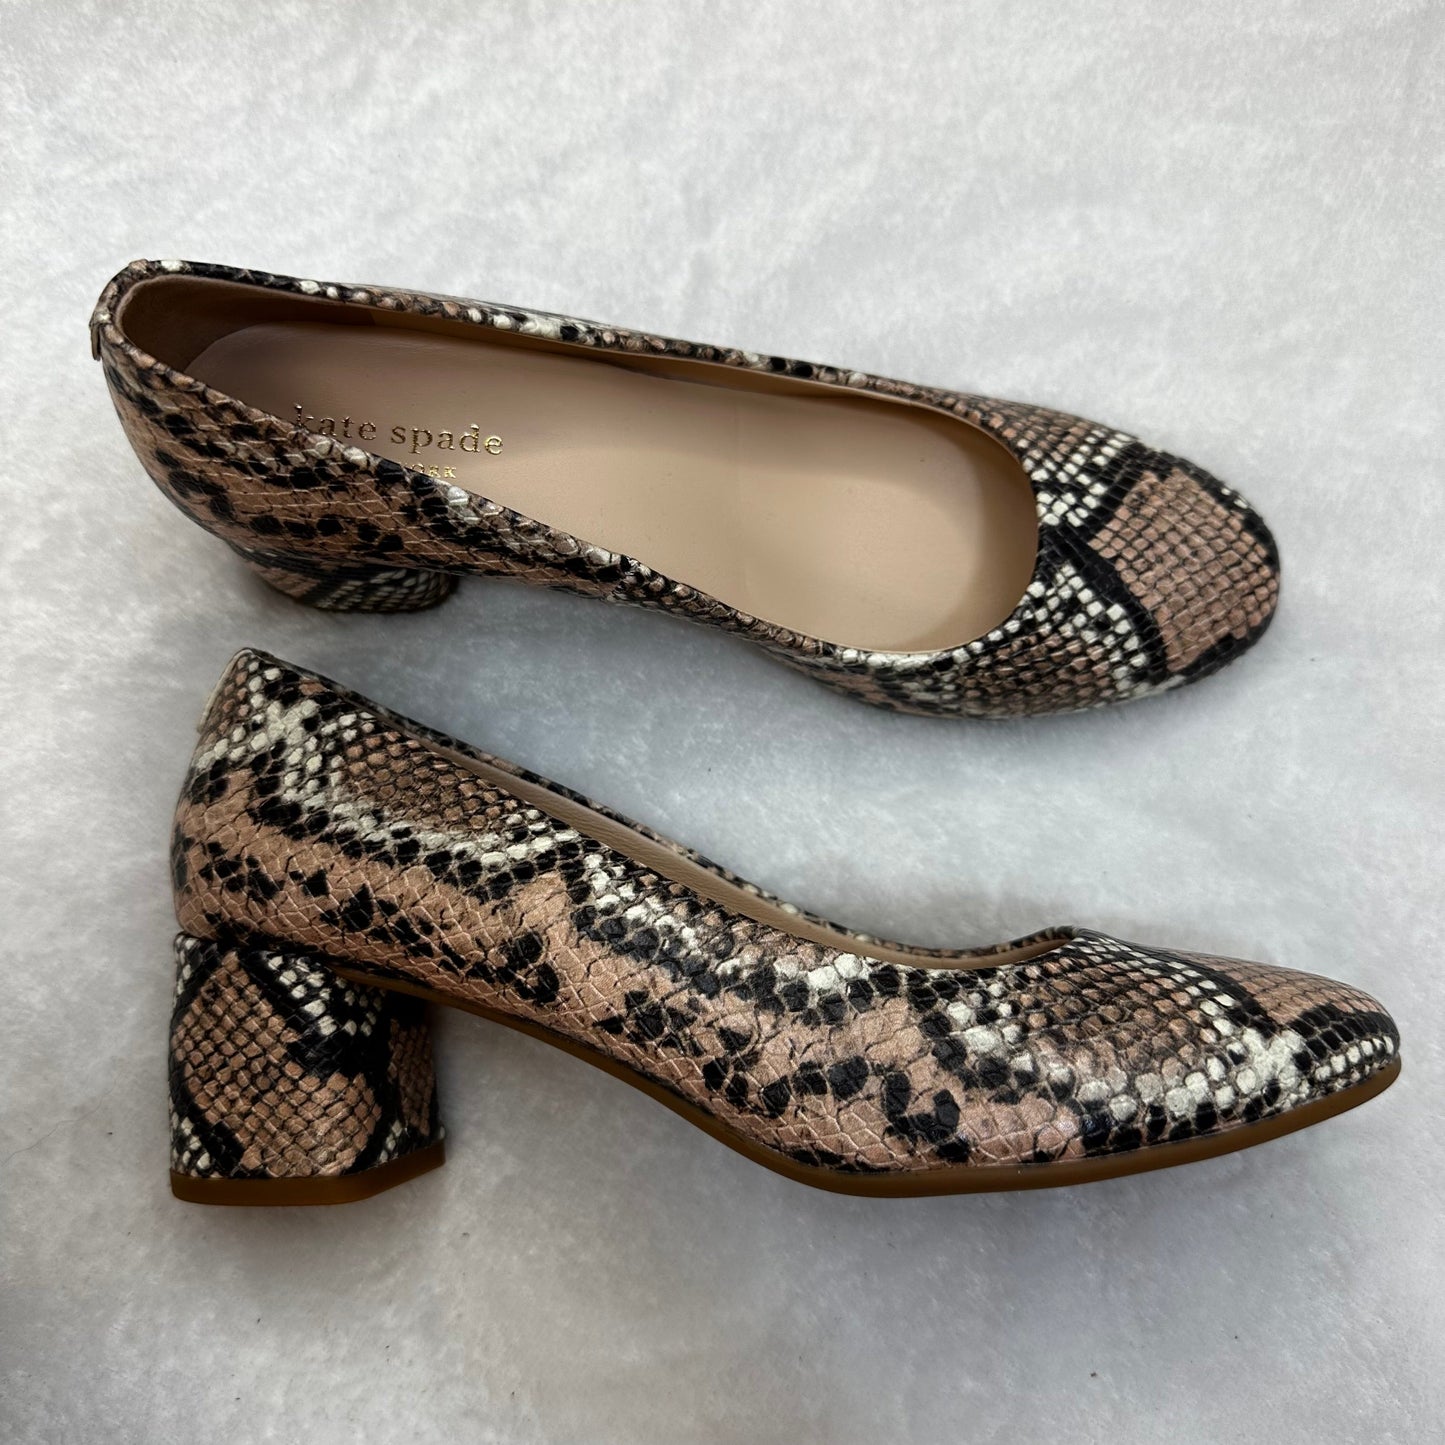 Snakeskin Print Shoes Heels Block Kate Spade, Size 6